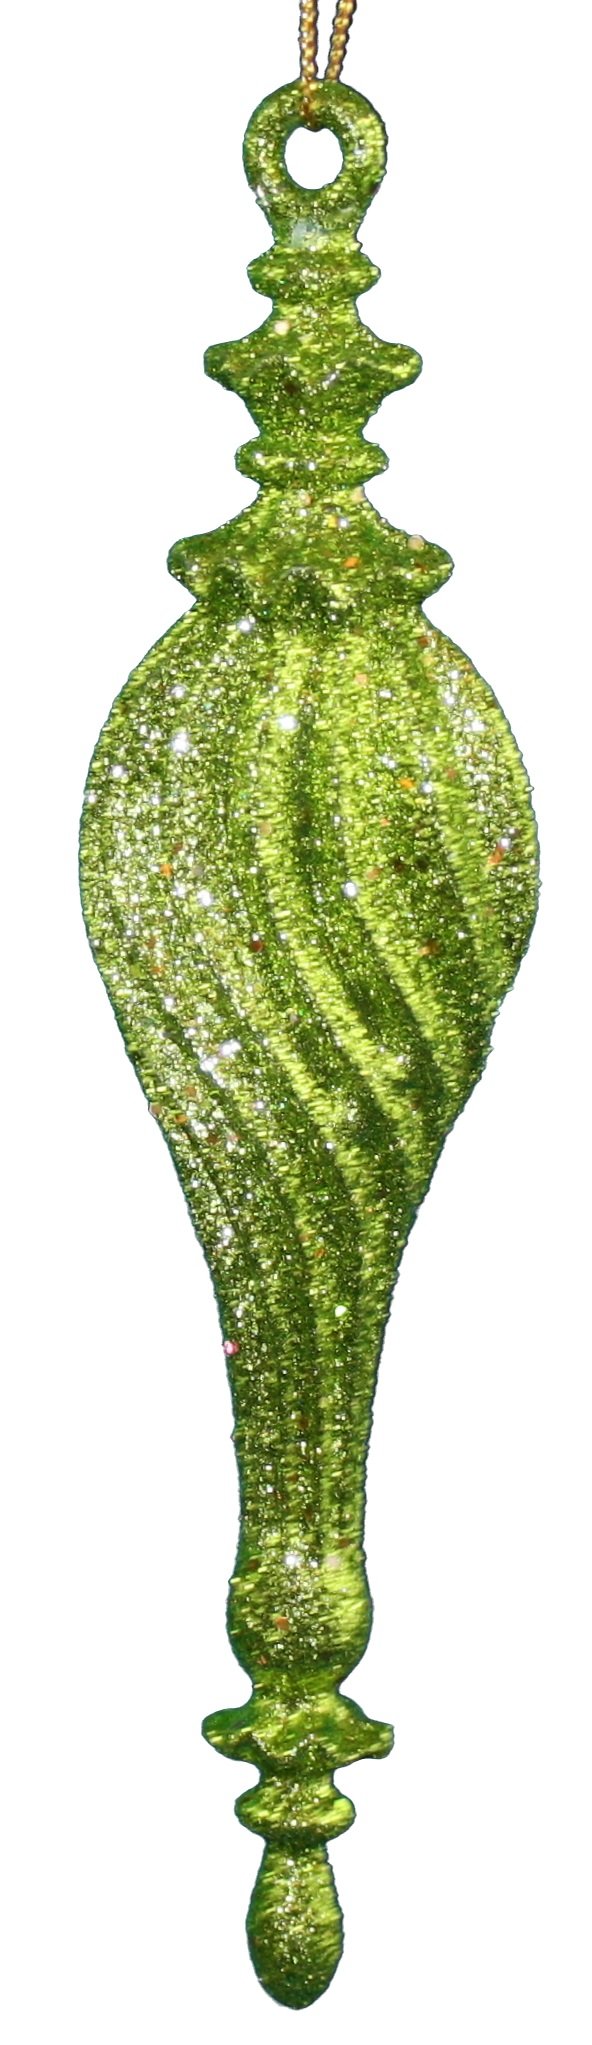 6.5 inch Green Acrylic Ornament - Style 2